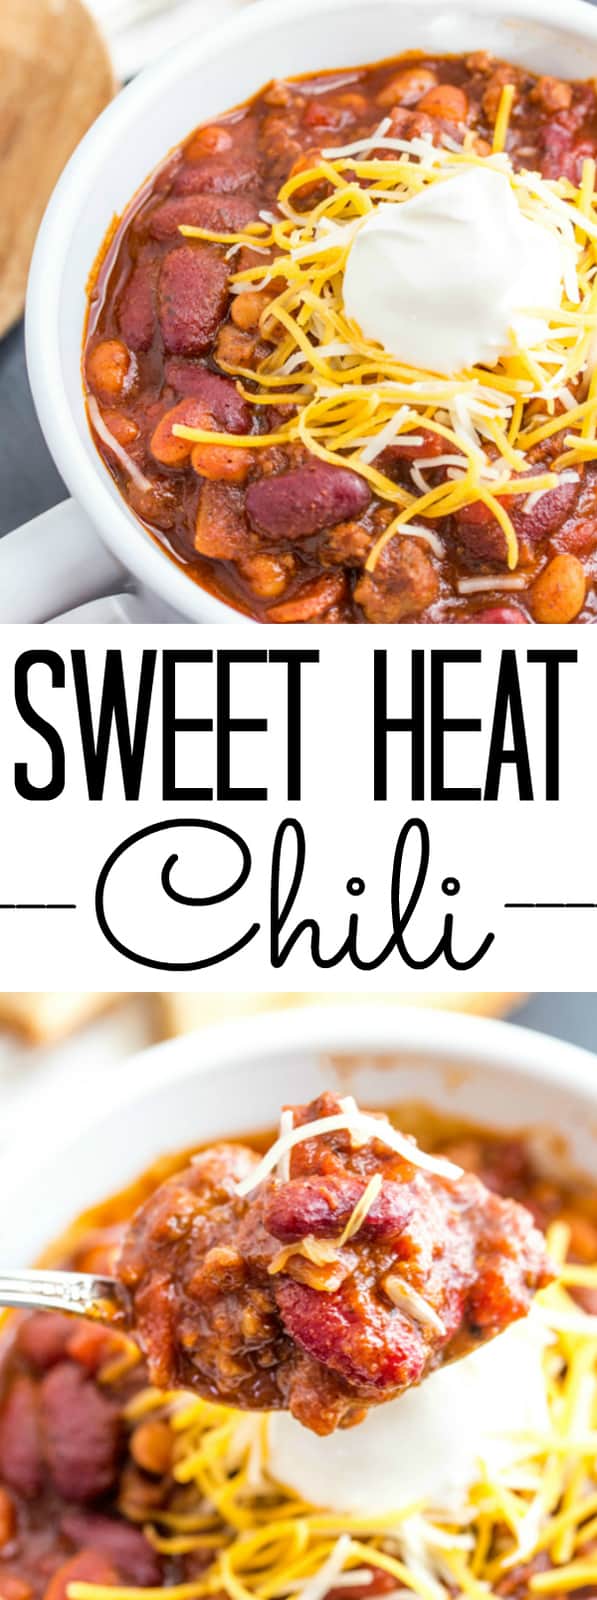 Sweet Heat Chili Pinterest image